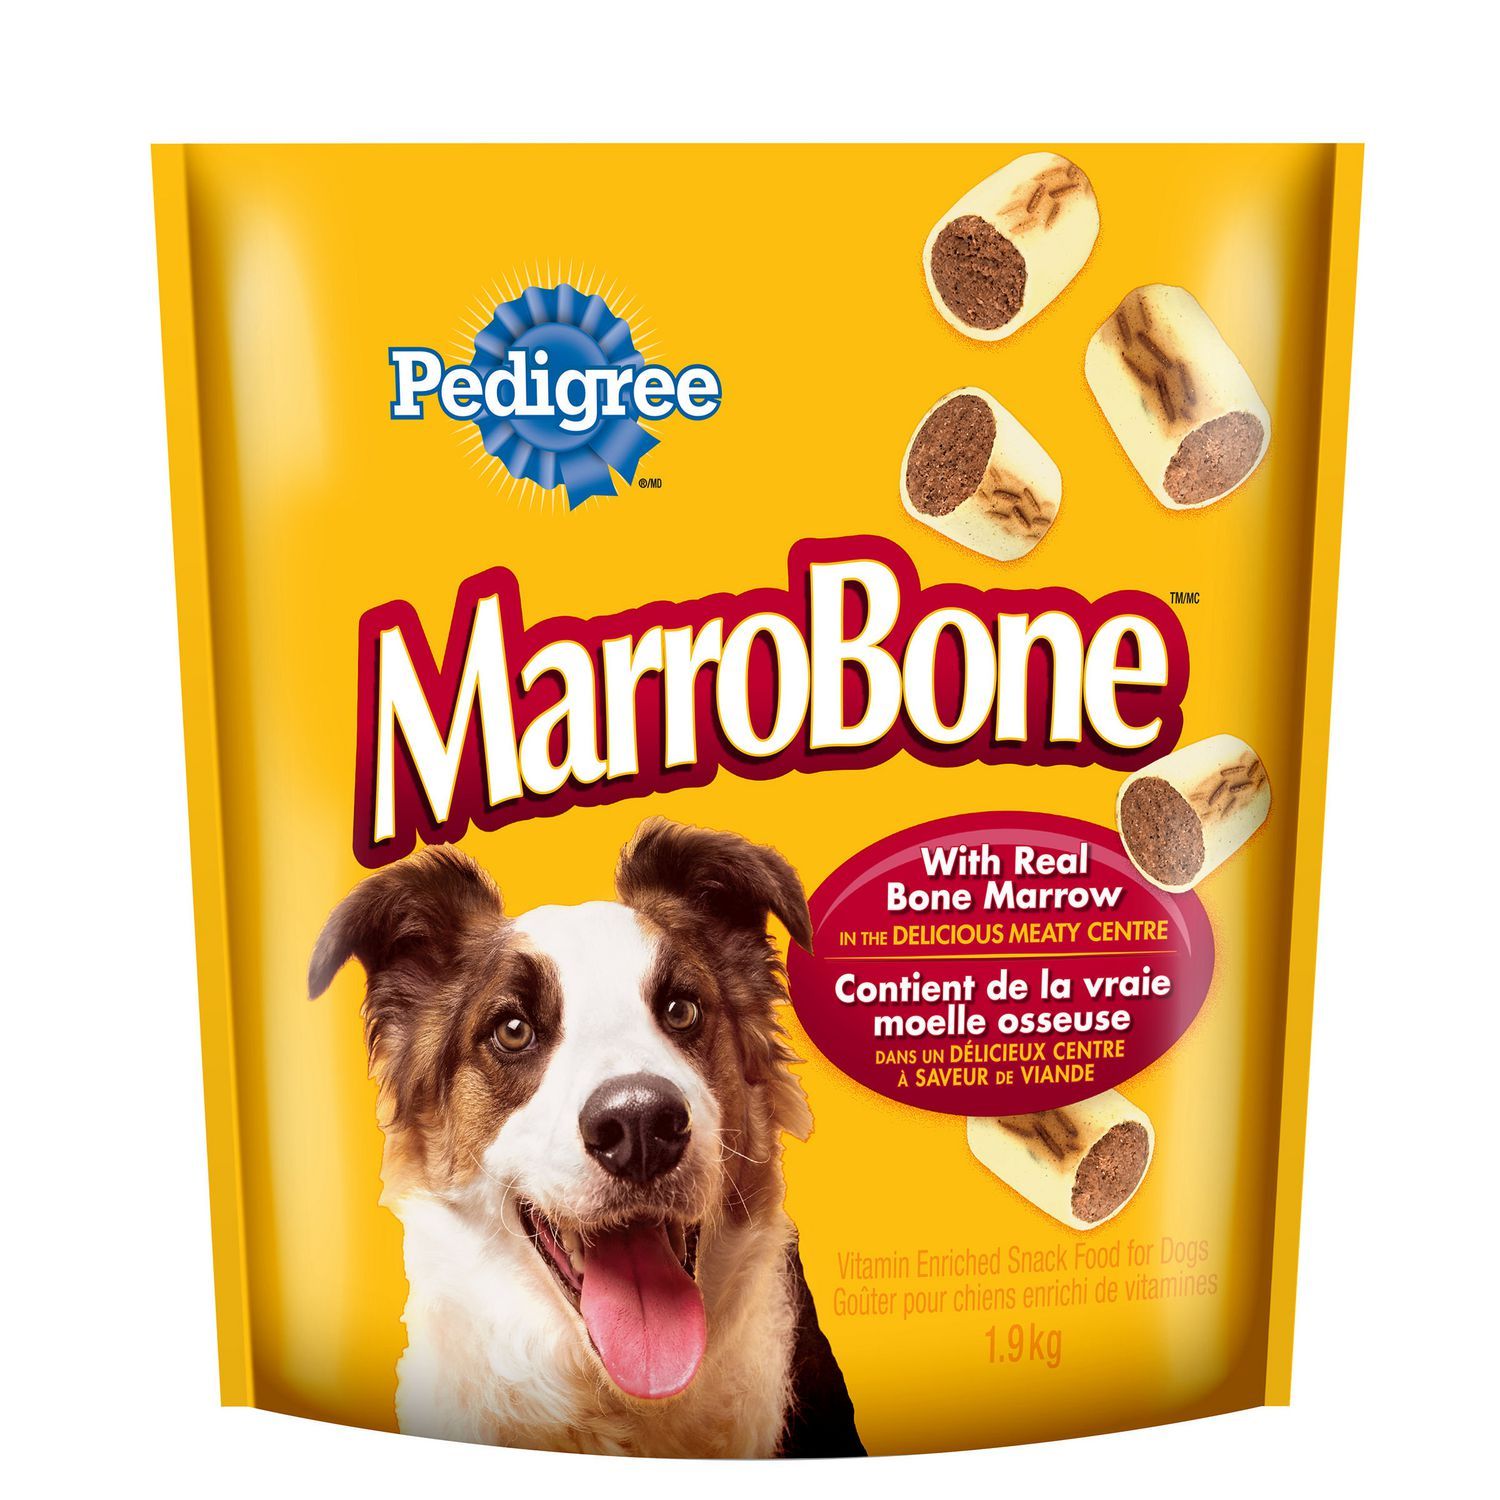 Pedigree Marrobone Vitamin Enriched Snack Food for Dogs 1.9 Kg Dog Treats 1.9 Kg | PetMax Canada